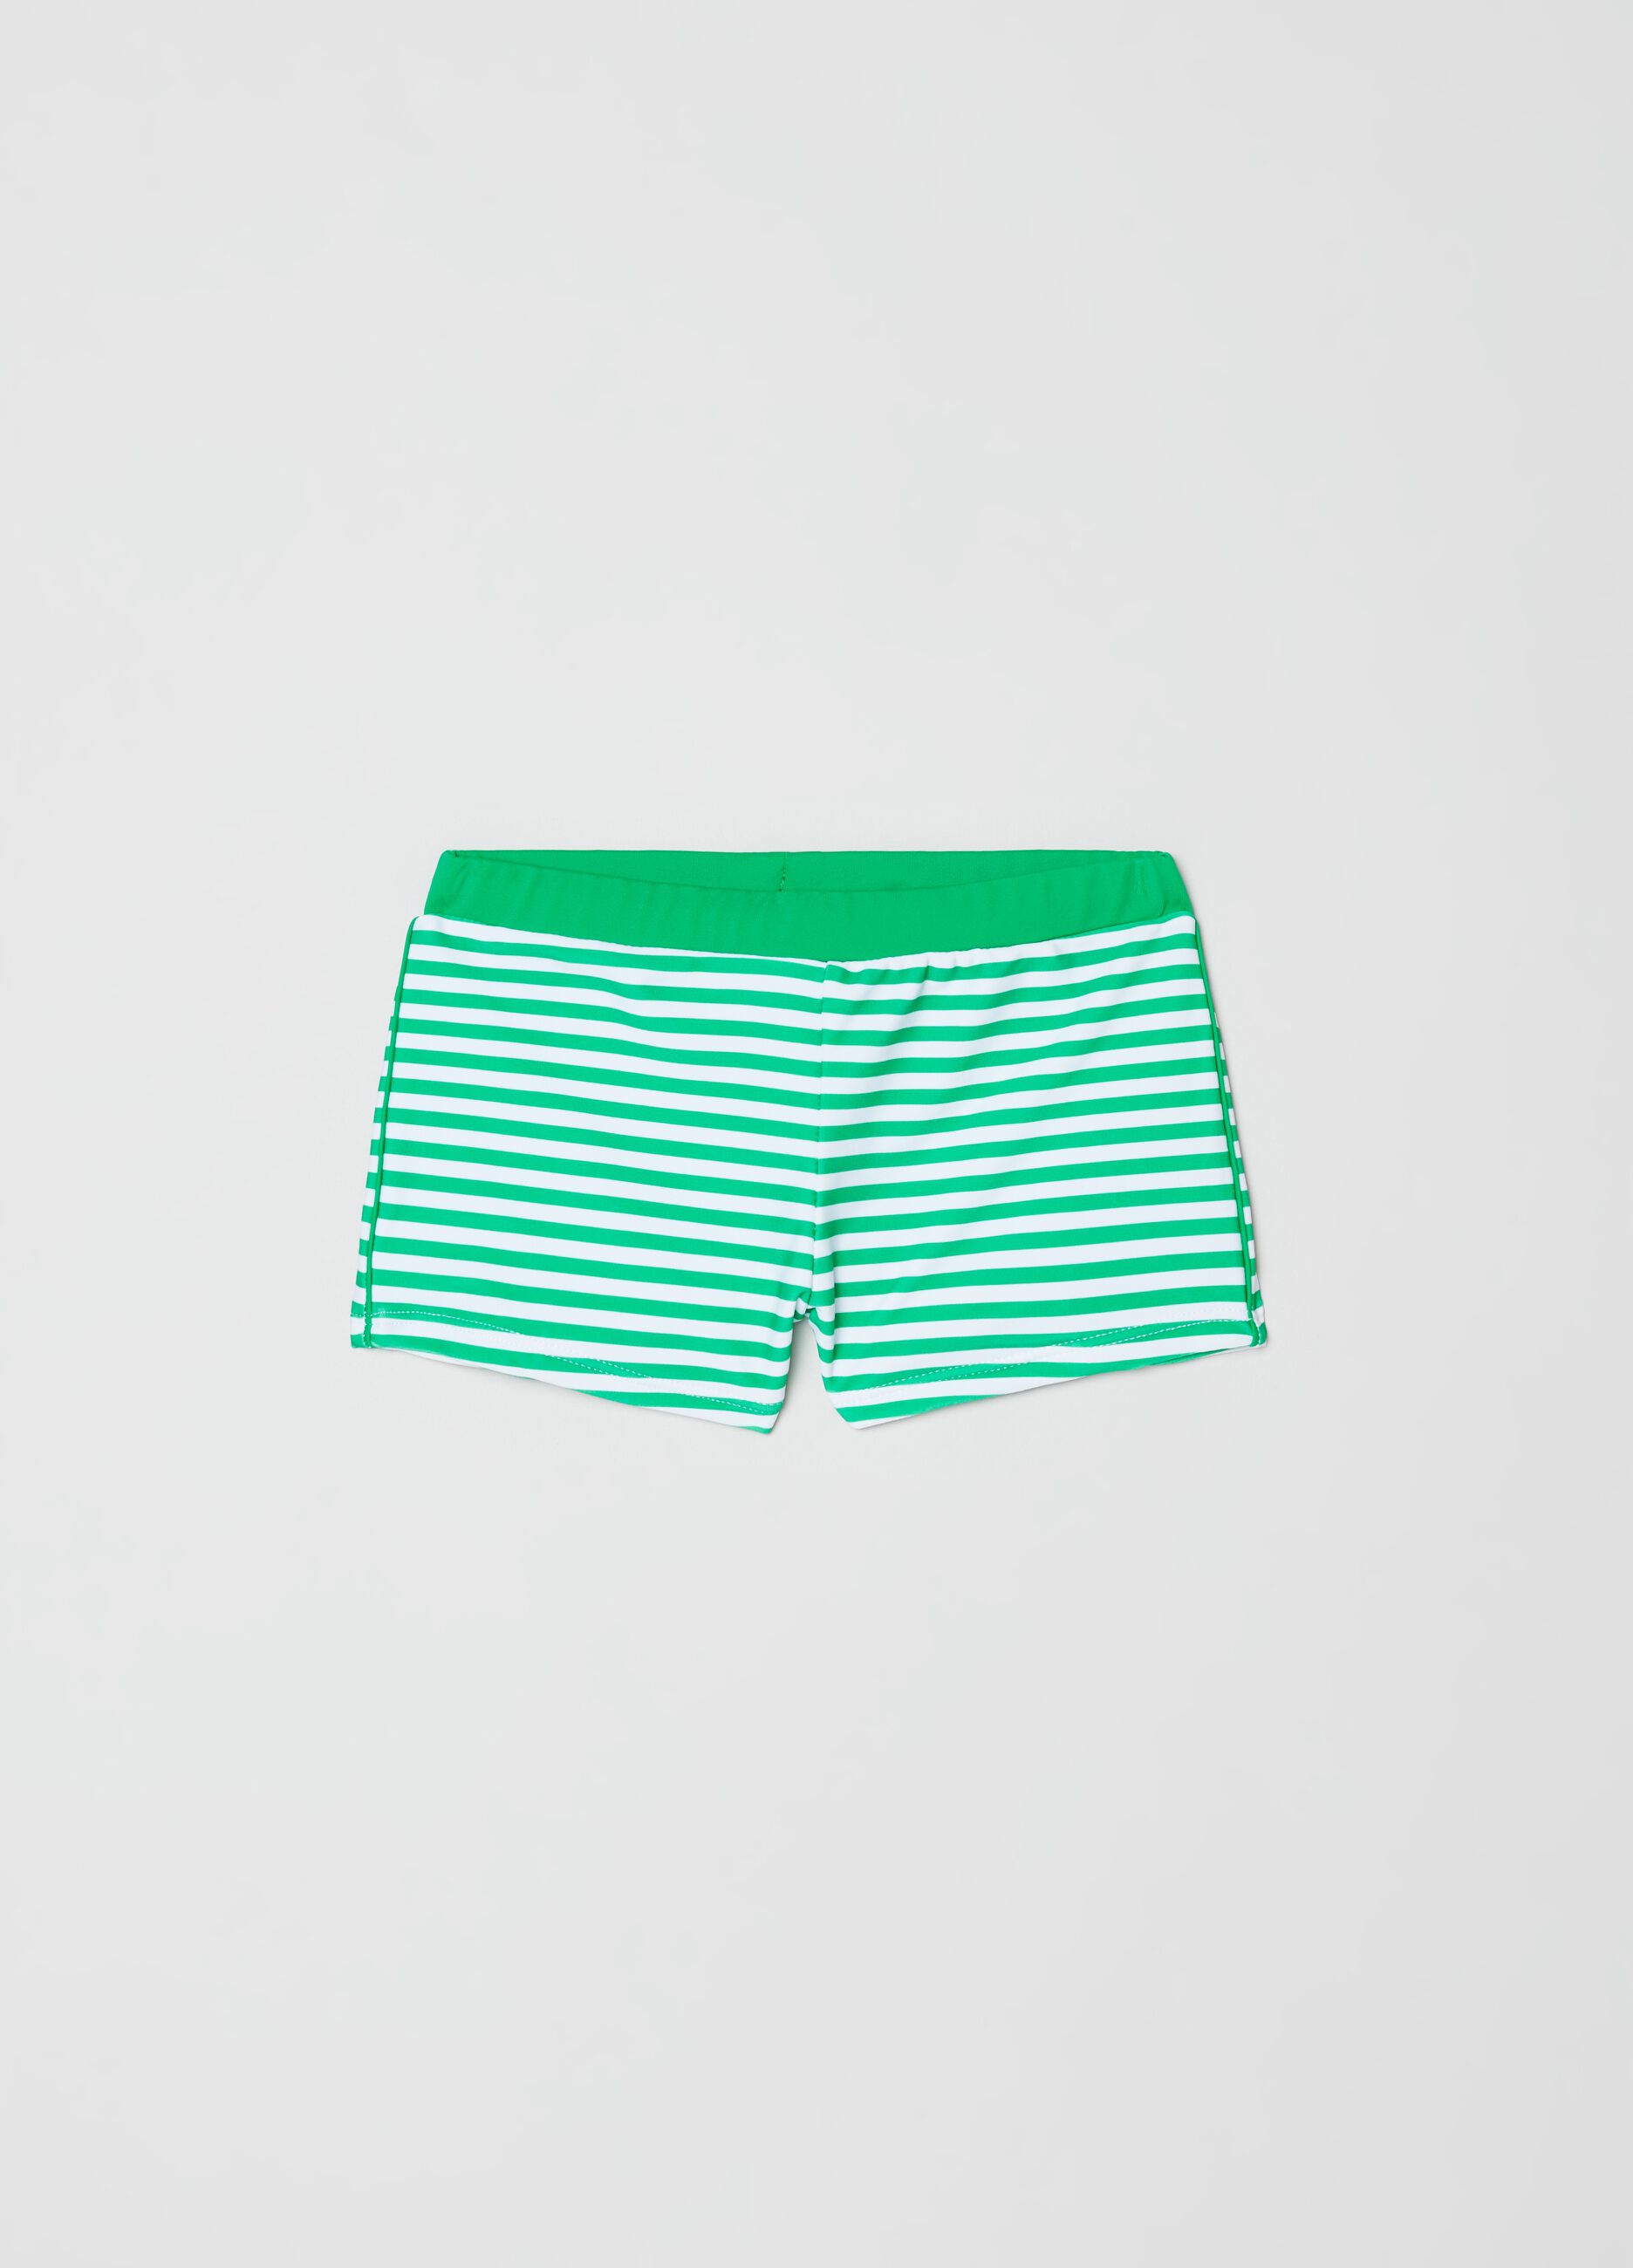 Striped swimming trunks